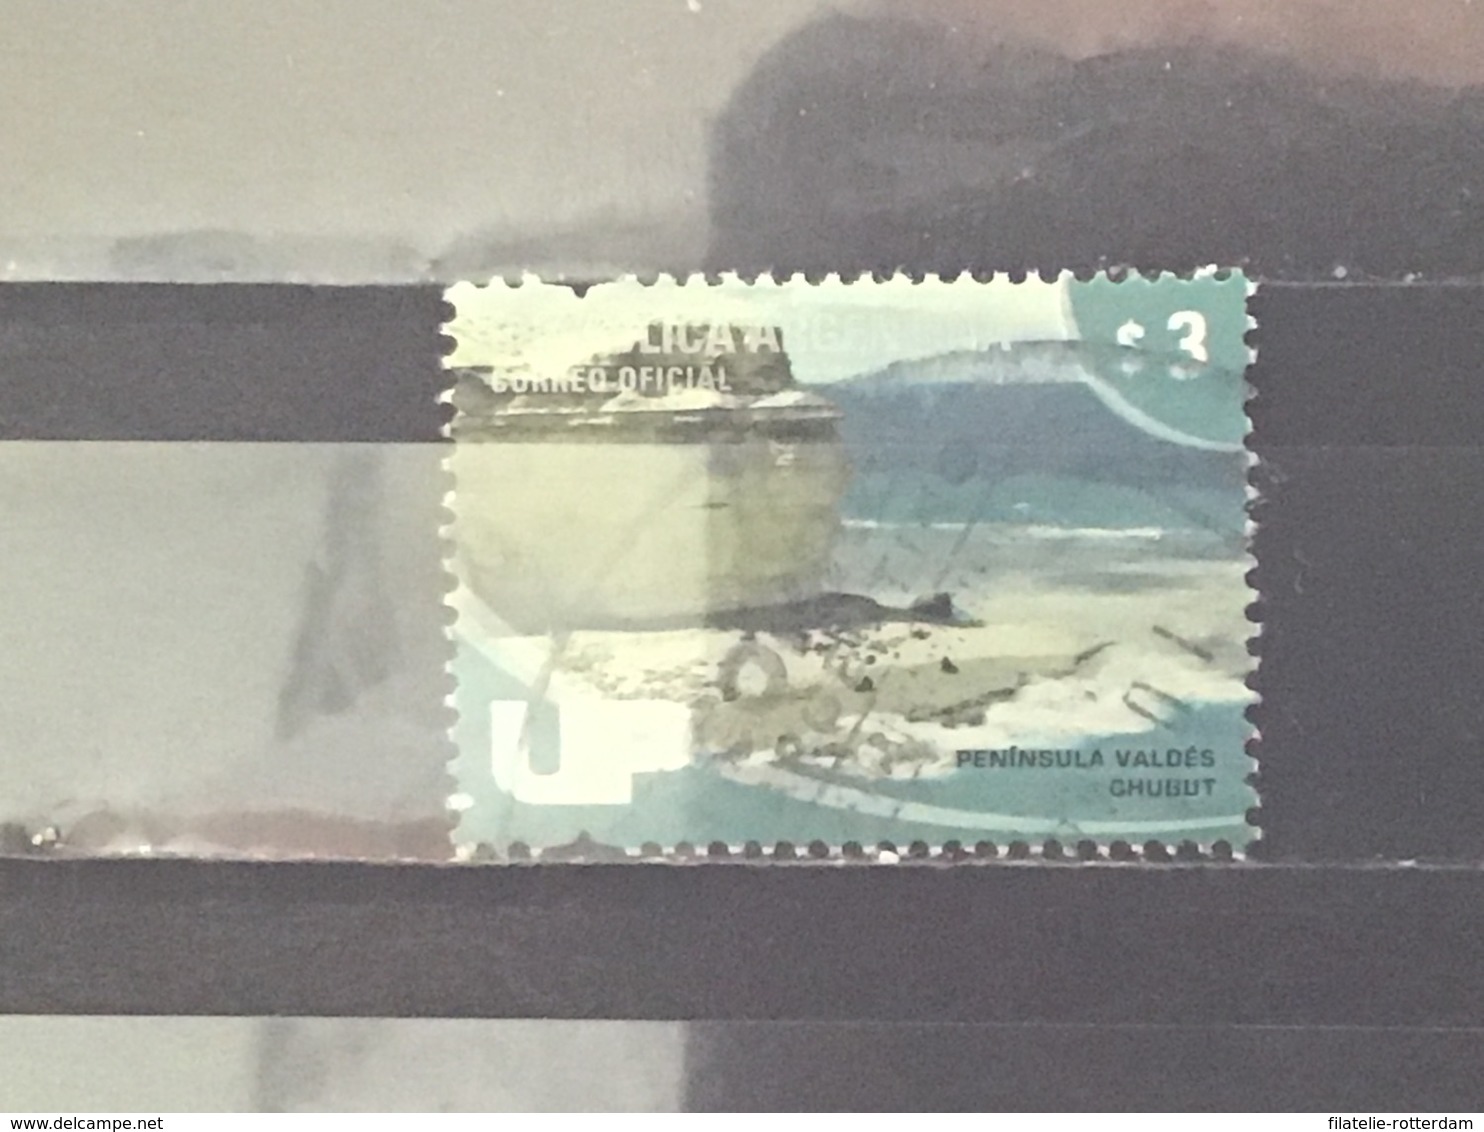 Argentinië / Argentina - Valdes Schiereiland (3) 2005 - Used Stamps